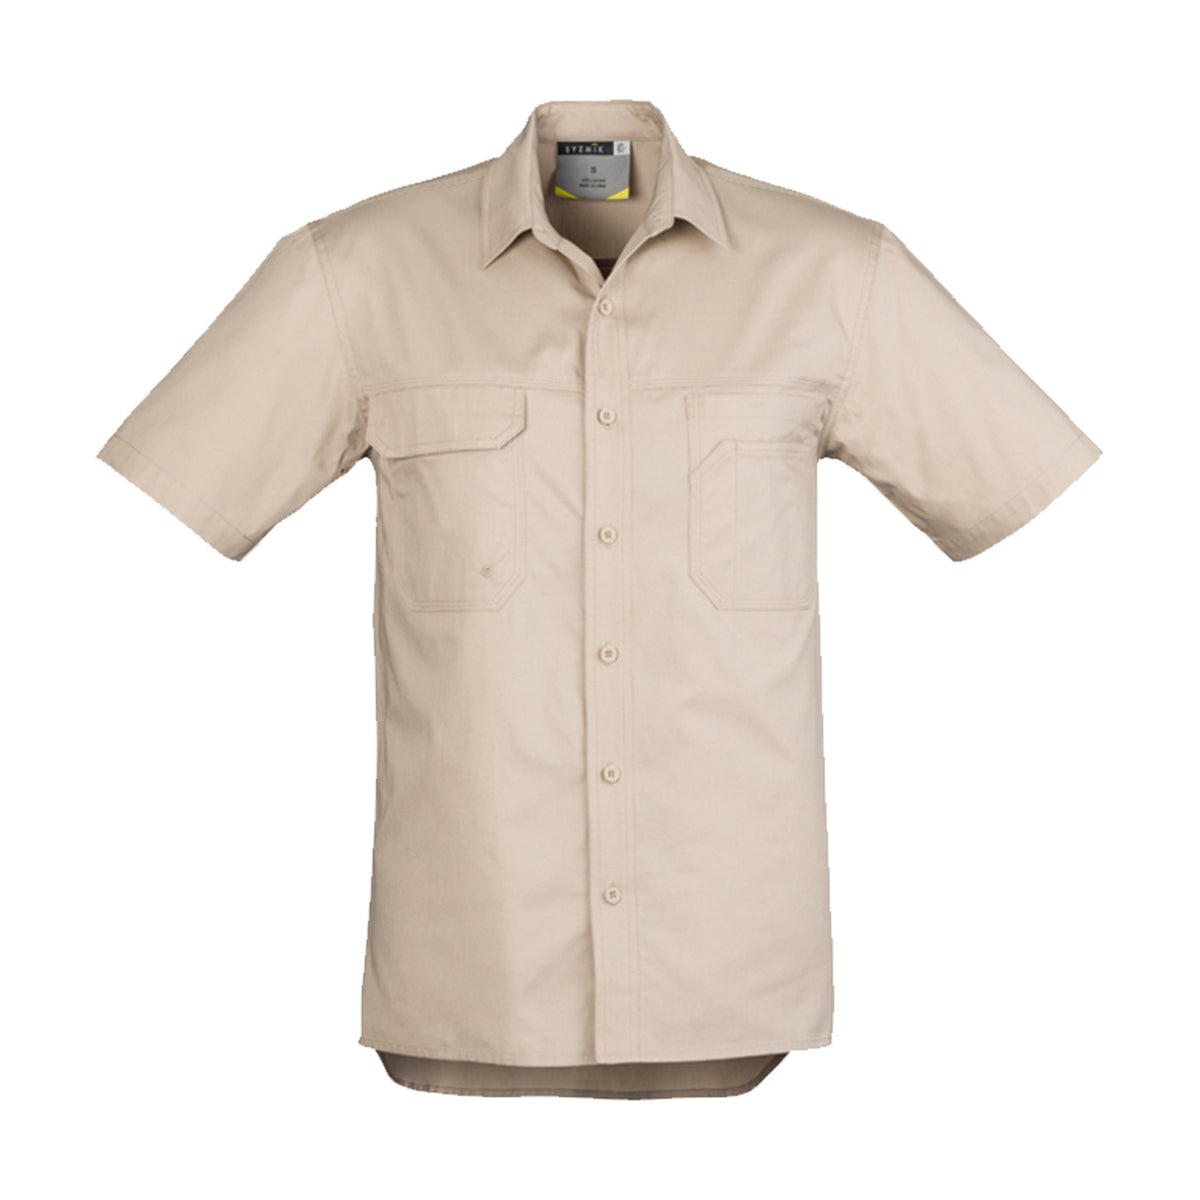 light weight short sleeve tradie shirt in sand